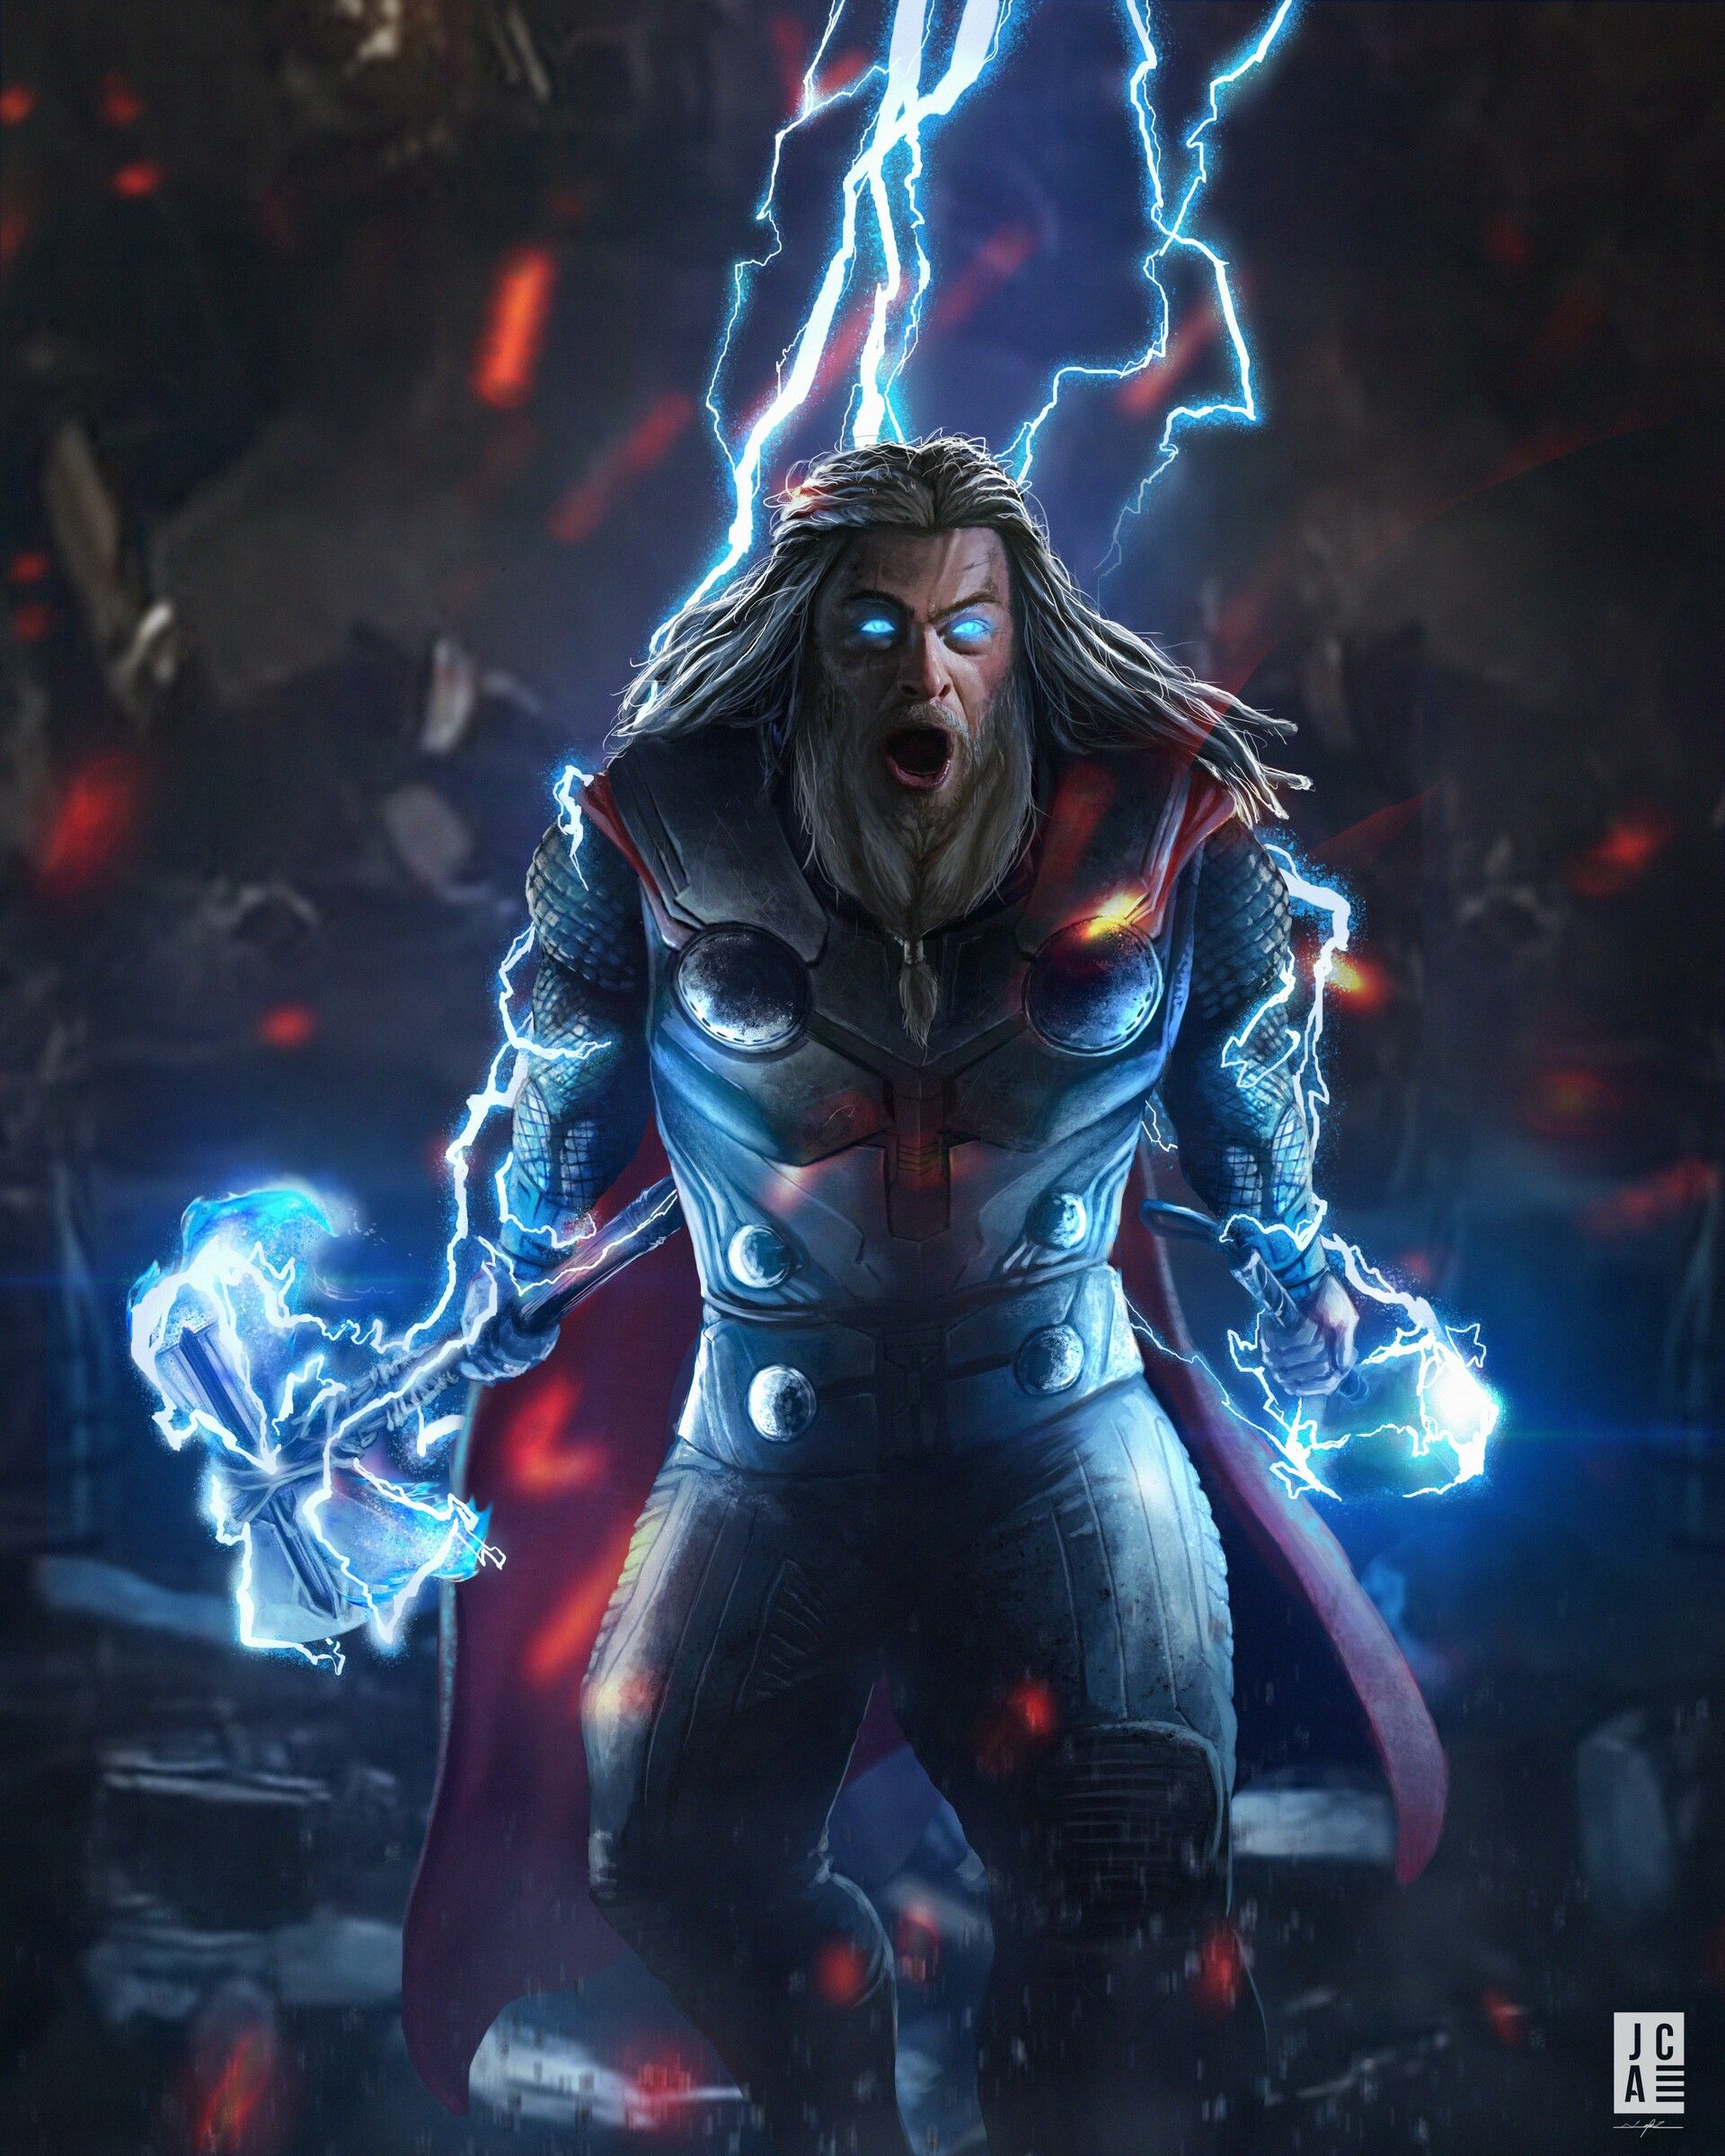 Thor with Mjolnir and Stormbreaker, Jackson Caspersz